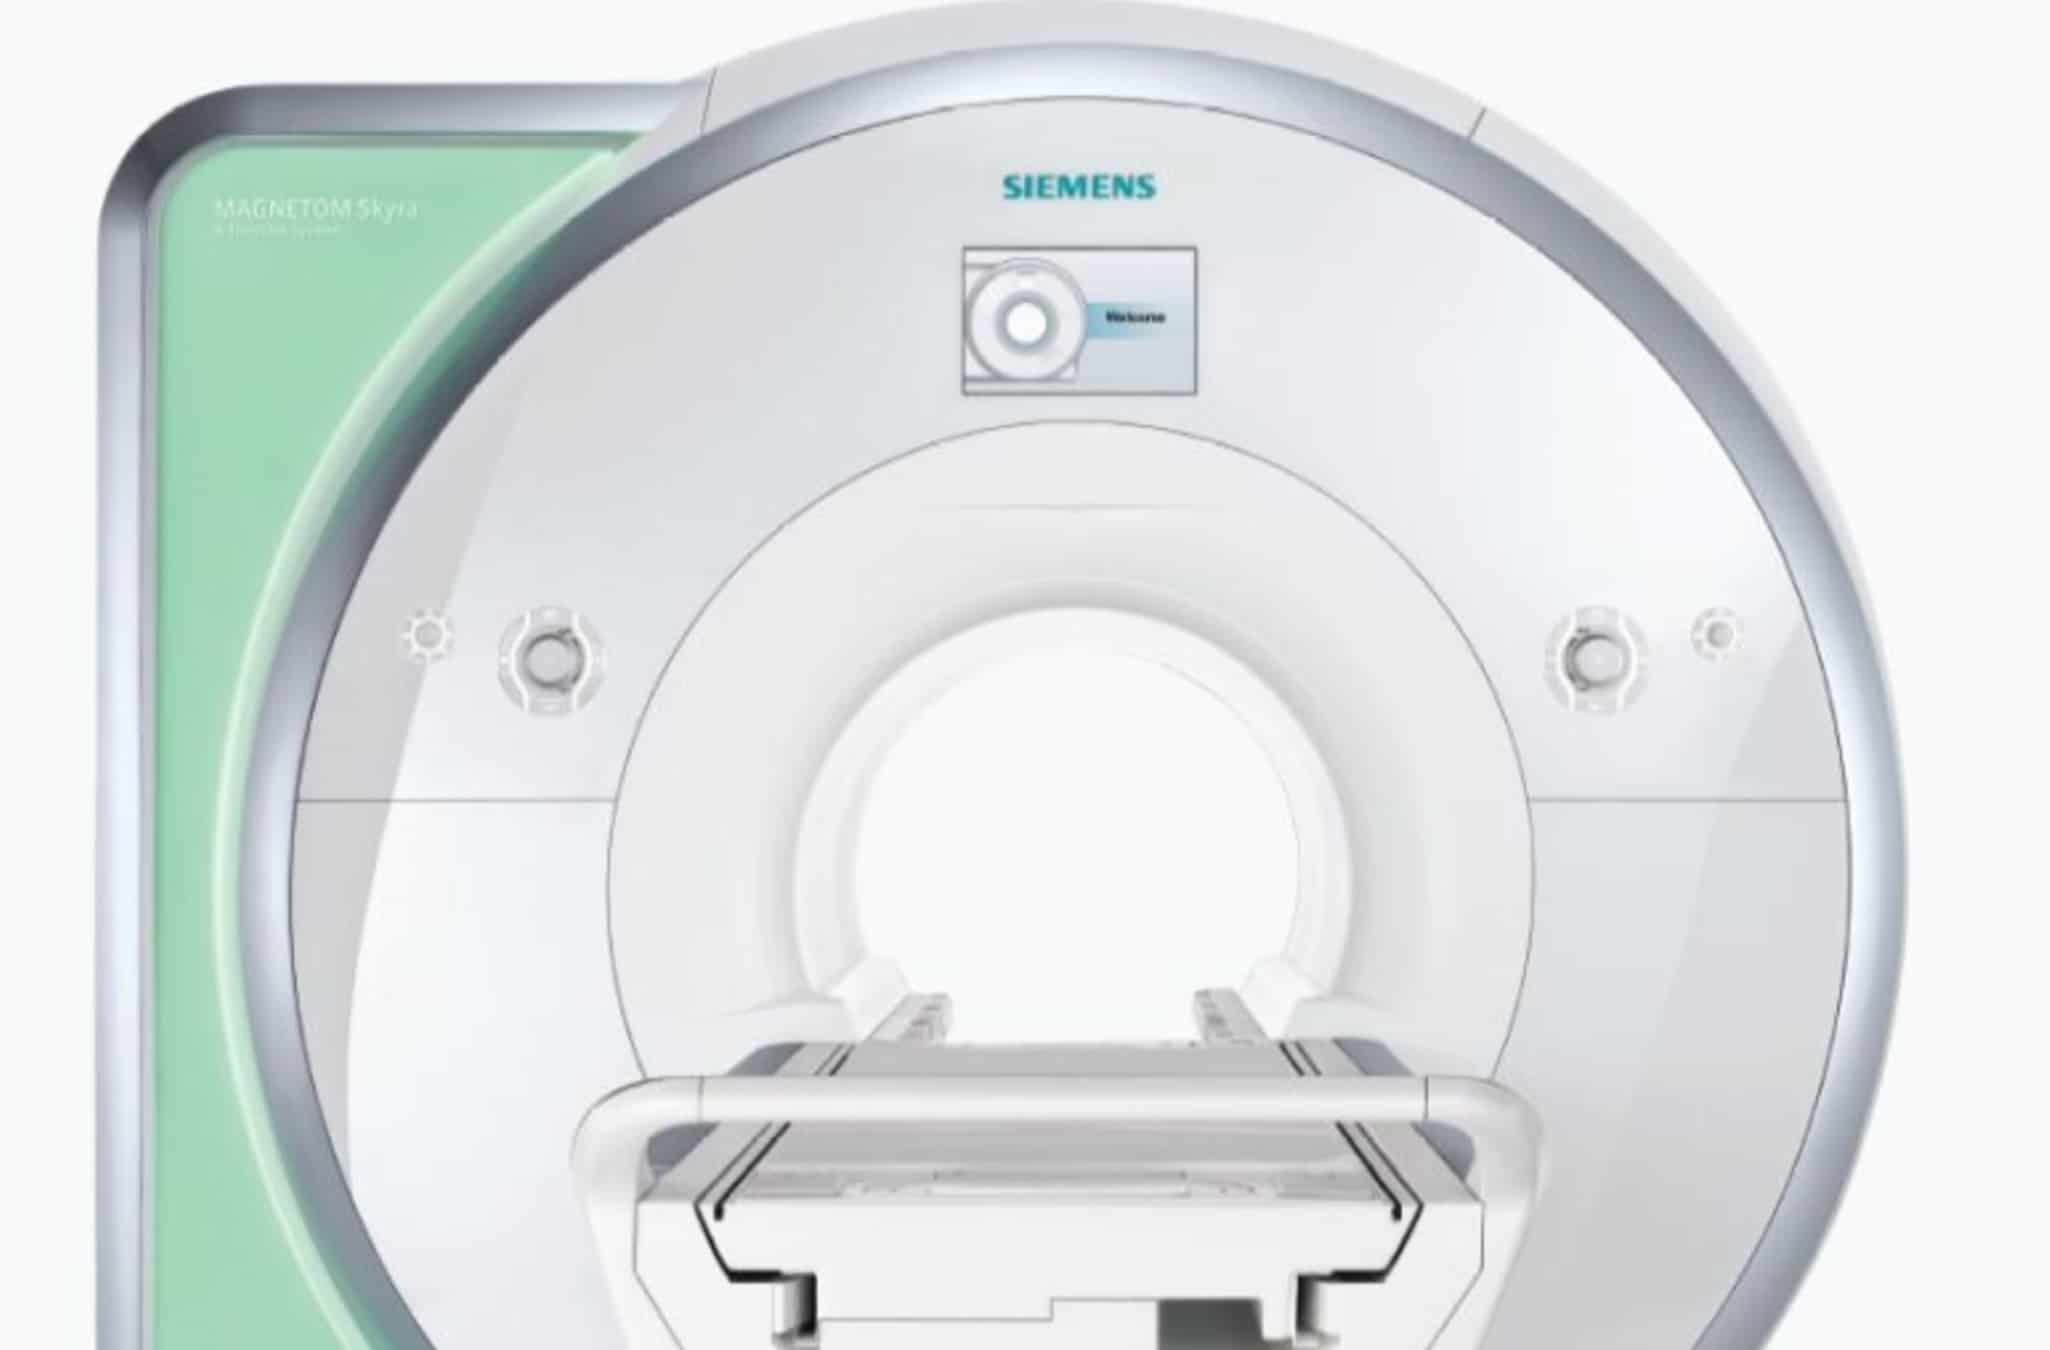 Echelon Health 3T MRI at ESC Marylebone